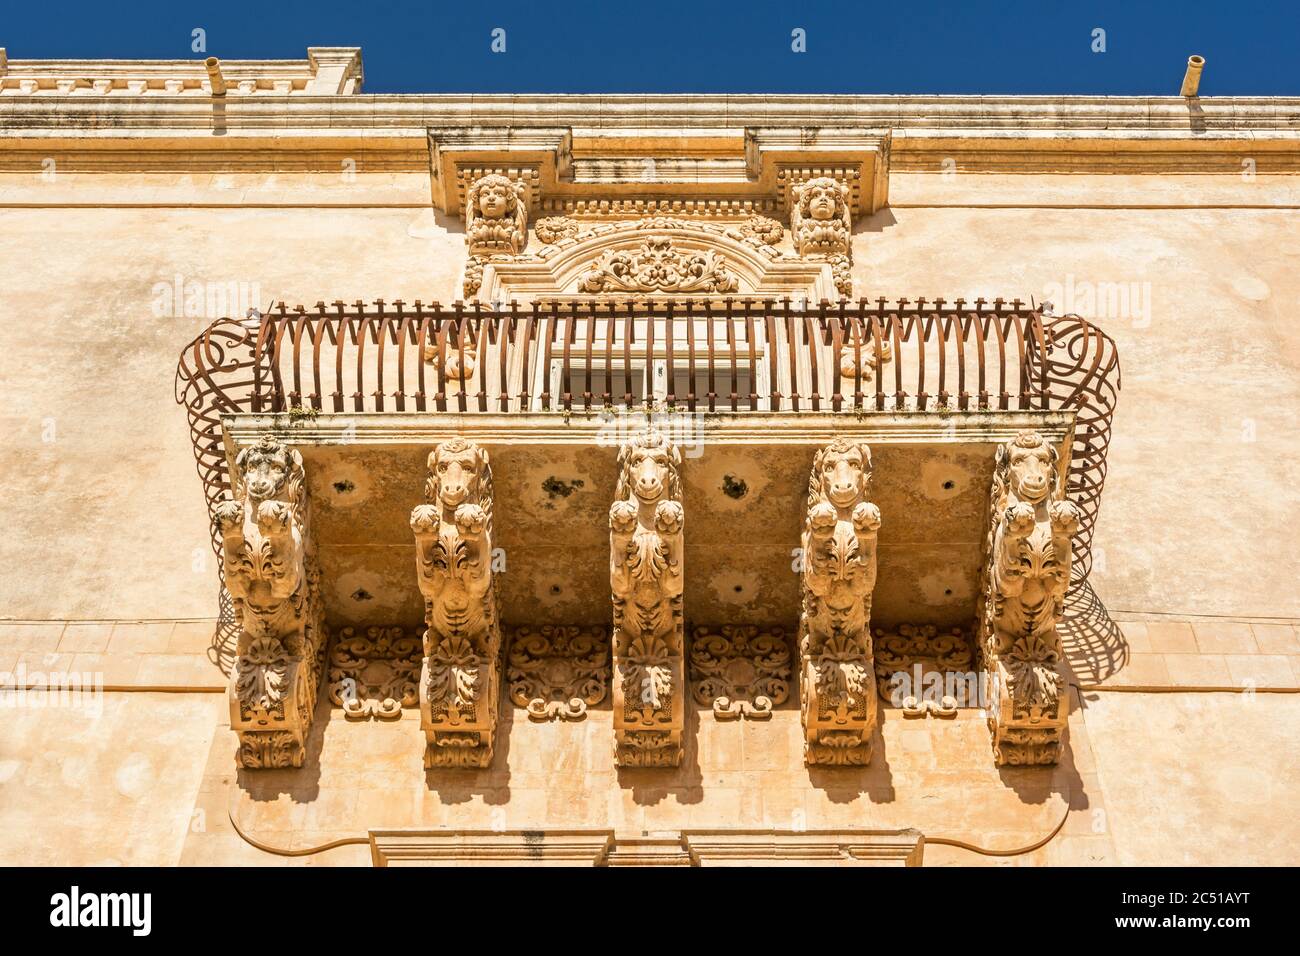 Schöner alter barocker Balkon mit Pferdornamenten in Noto, Sizilien, Italien Stockfoto